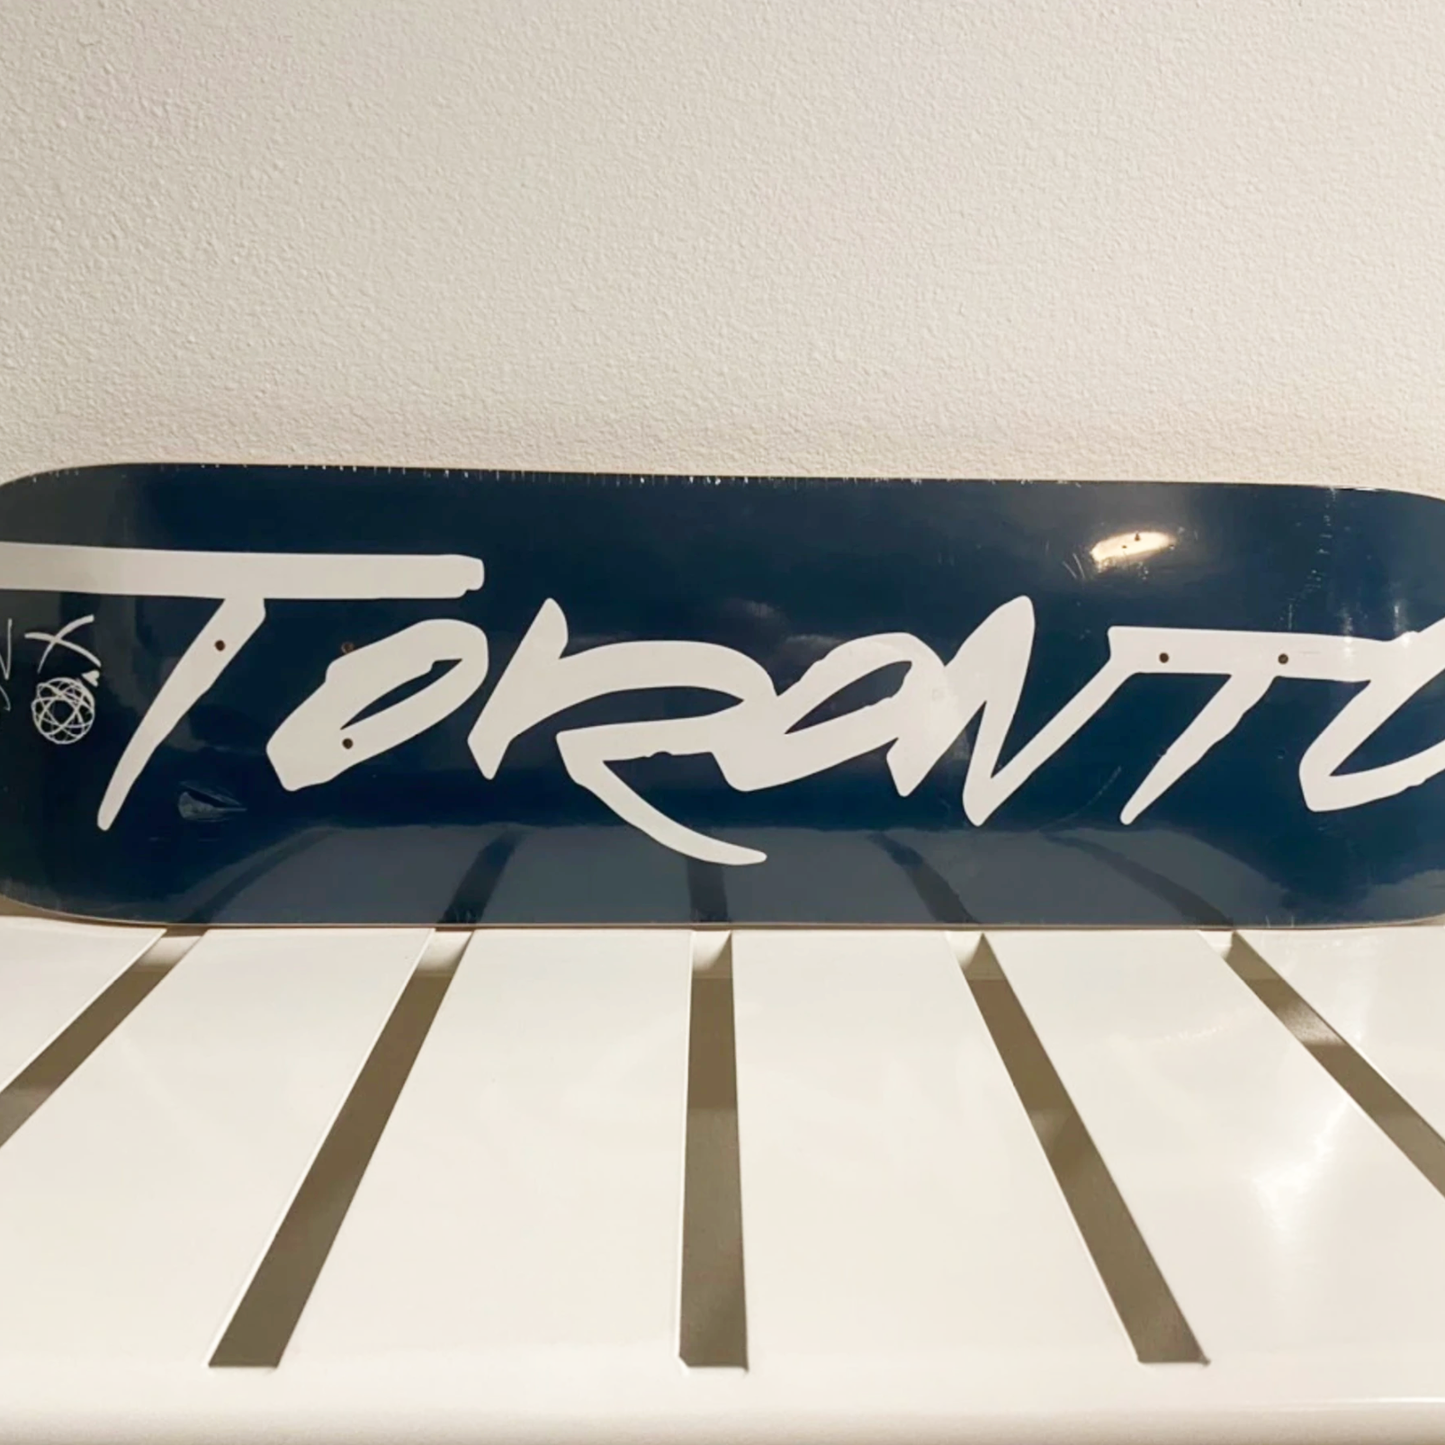 Futura x Weeknd Toronto Deck